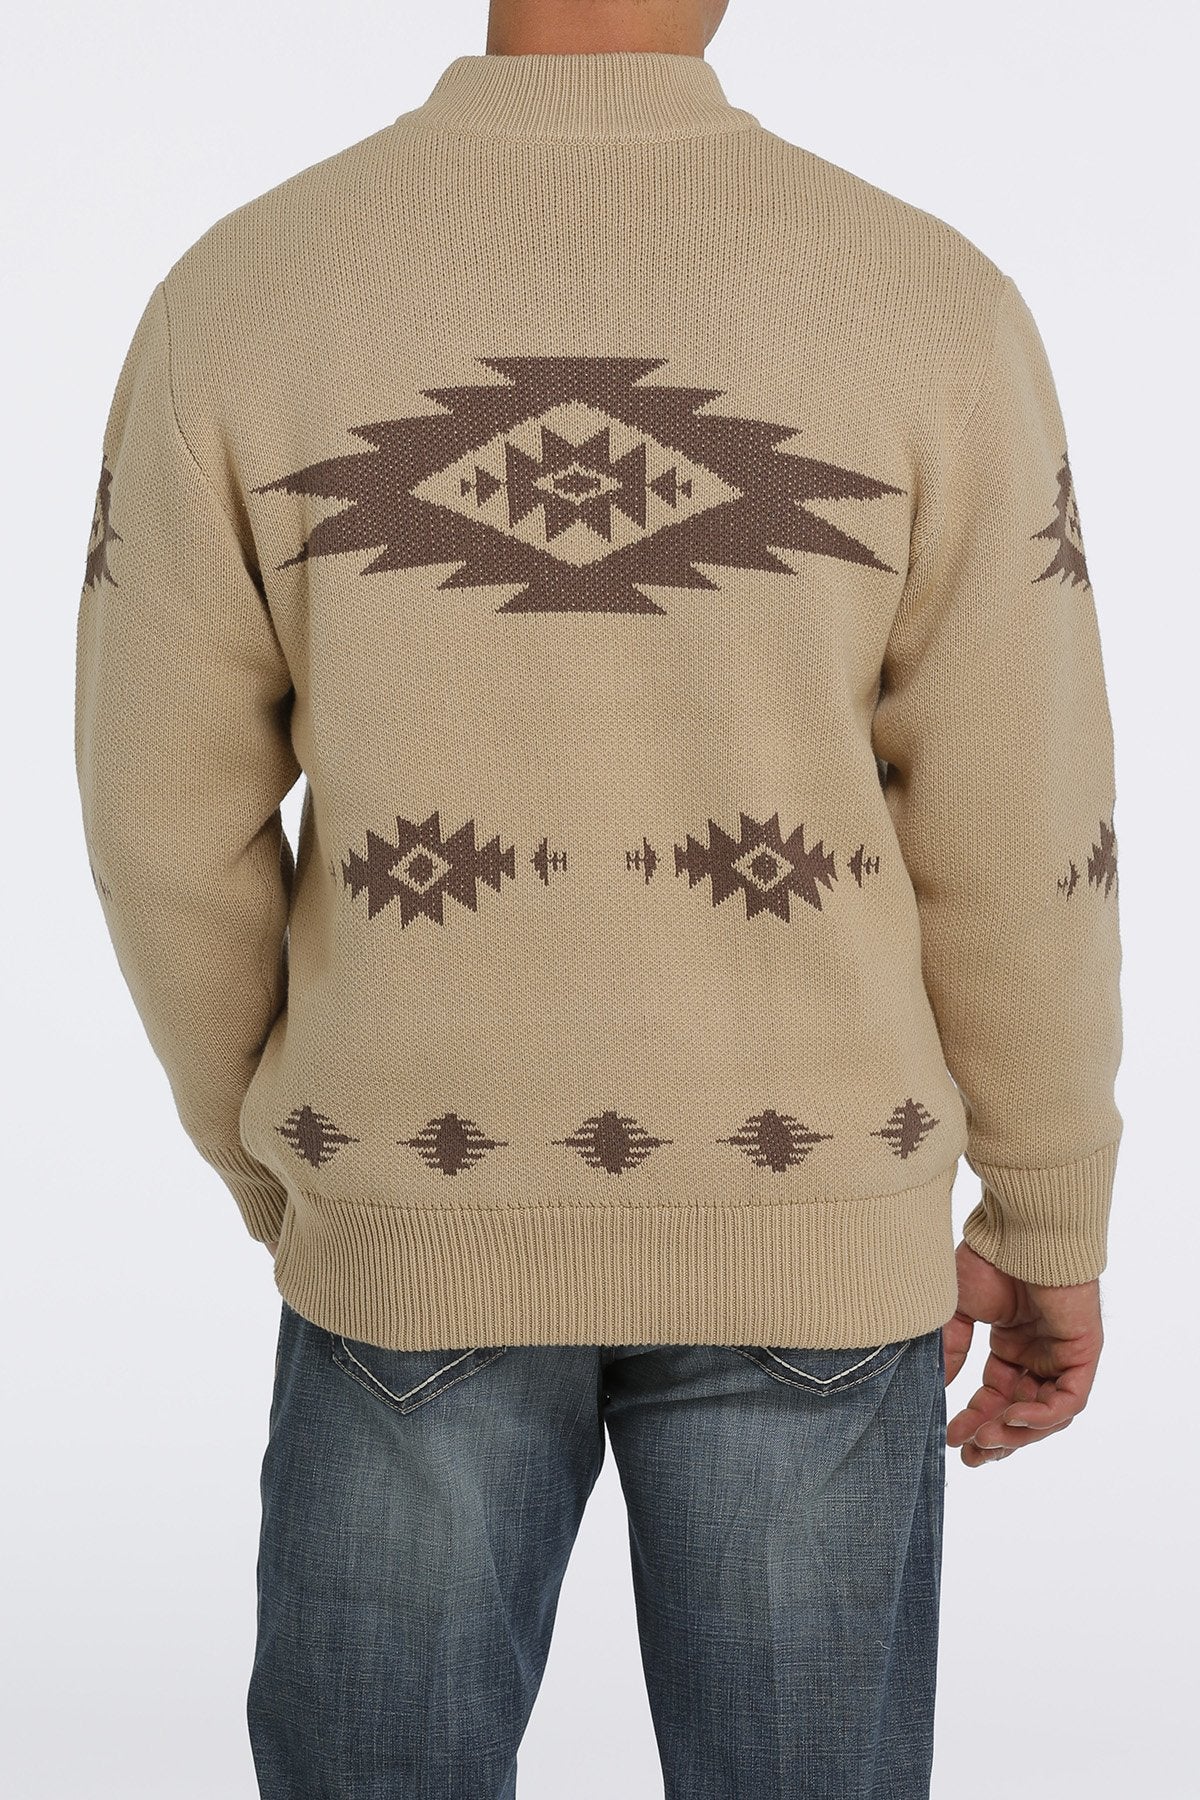 The Cinch Vintage Aztec Khaki Sweater Jacket